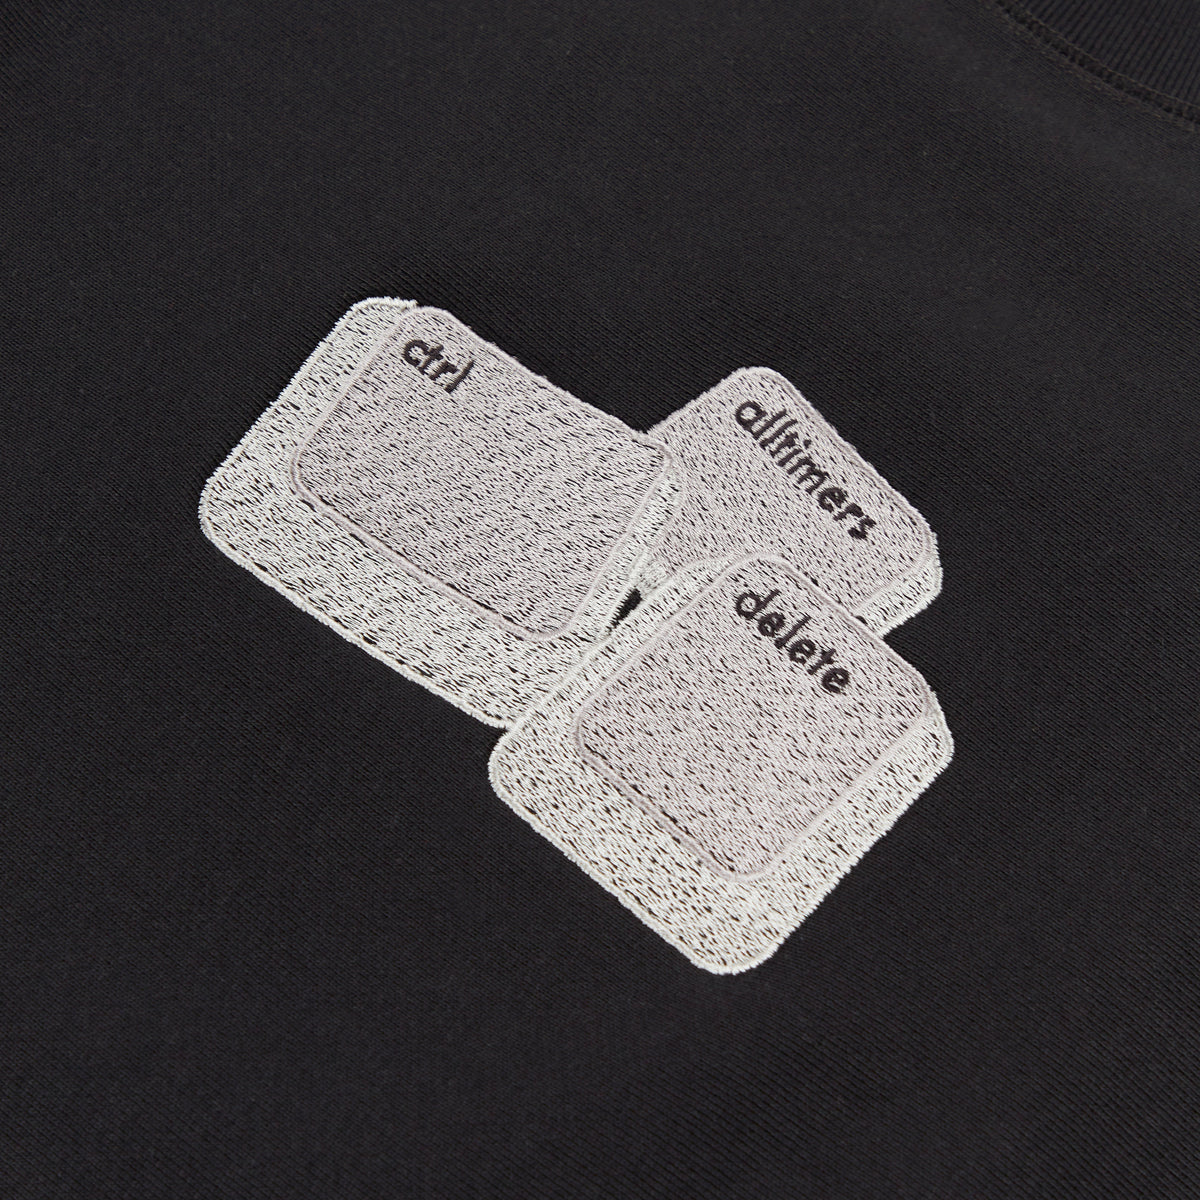 Alltimers Delete Embroidered Crewneck Sweatshirt - Black image 2